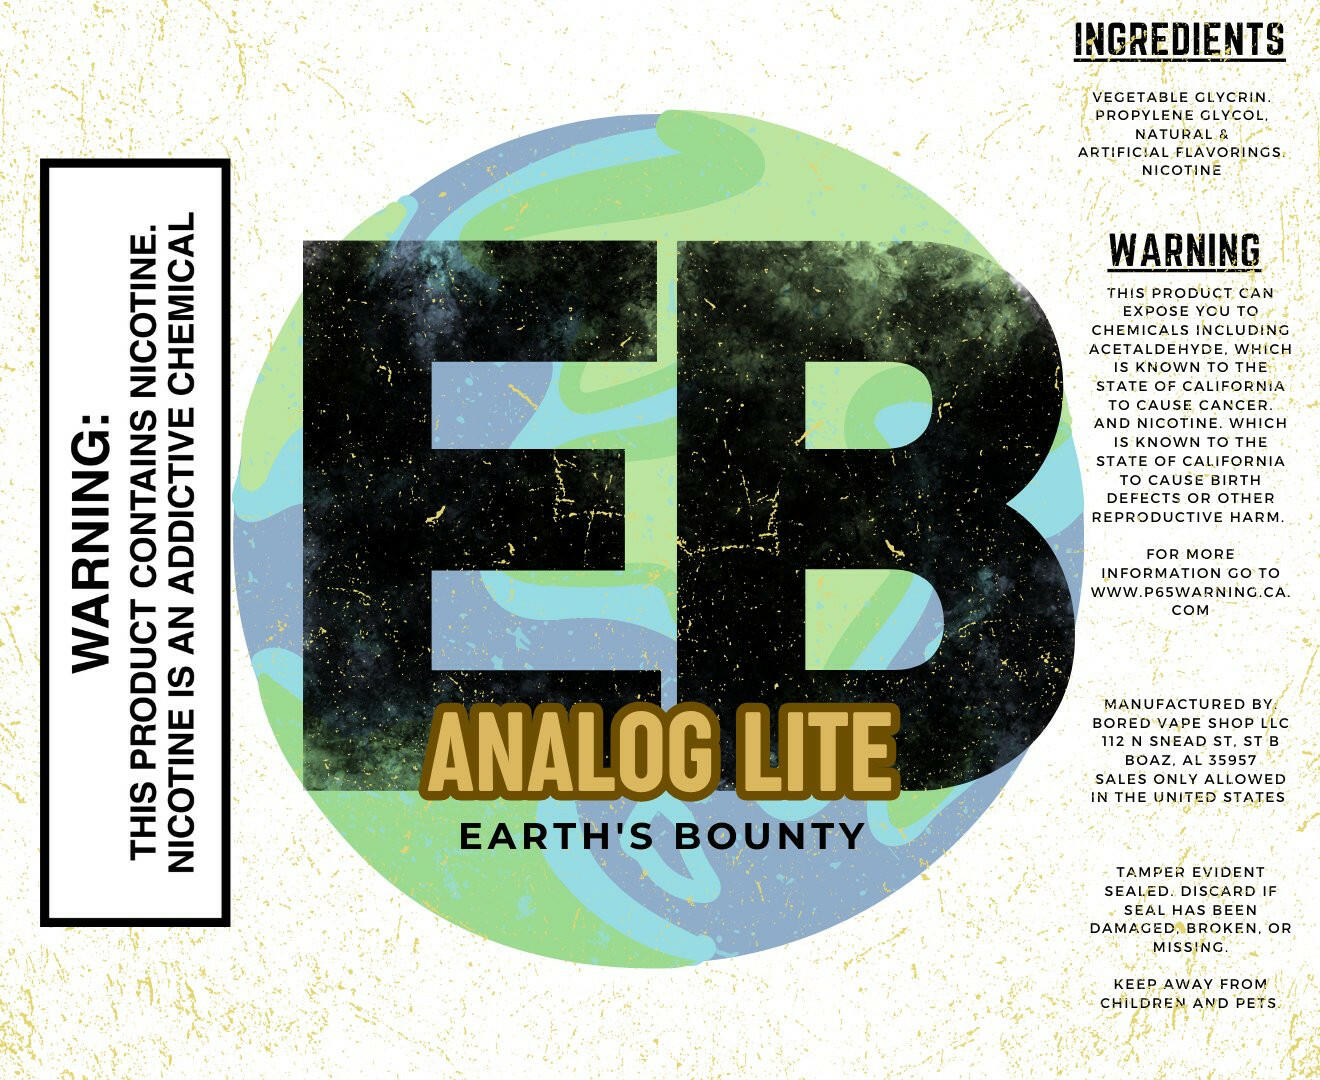 Analog Lite - Earths Bounty E-Juice